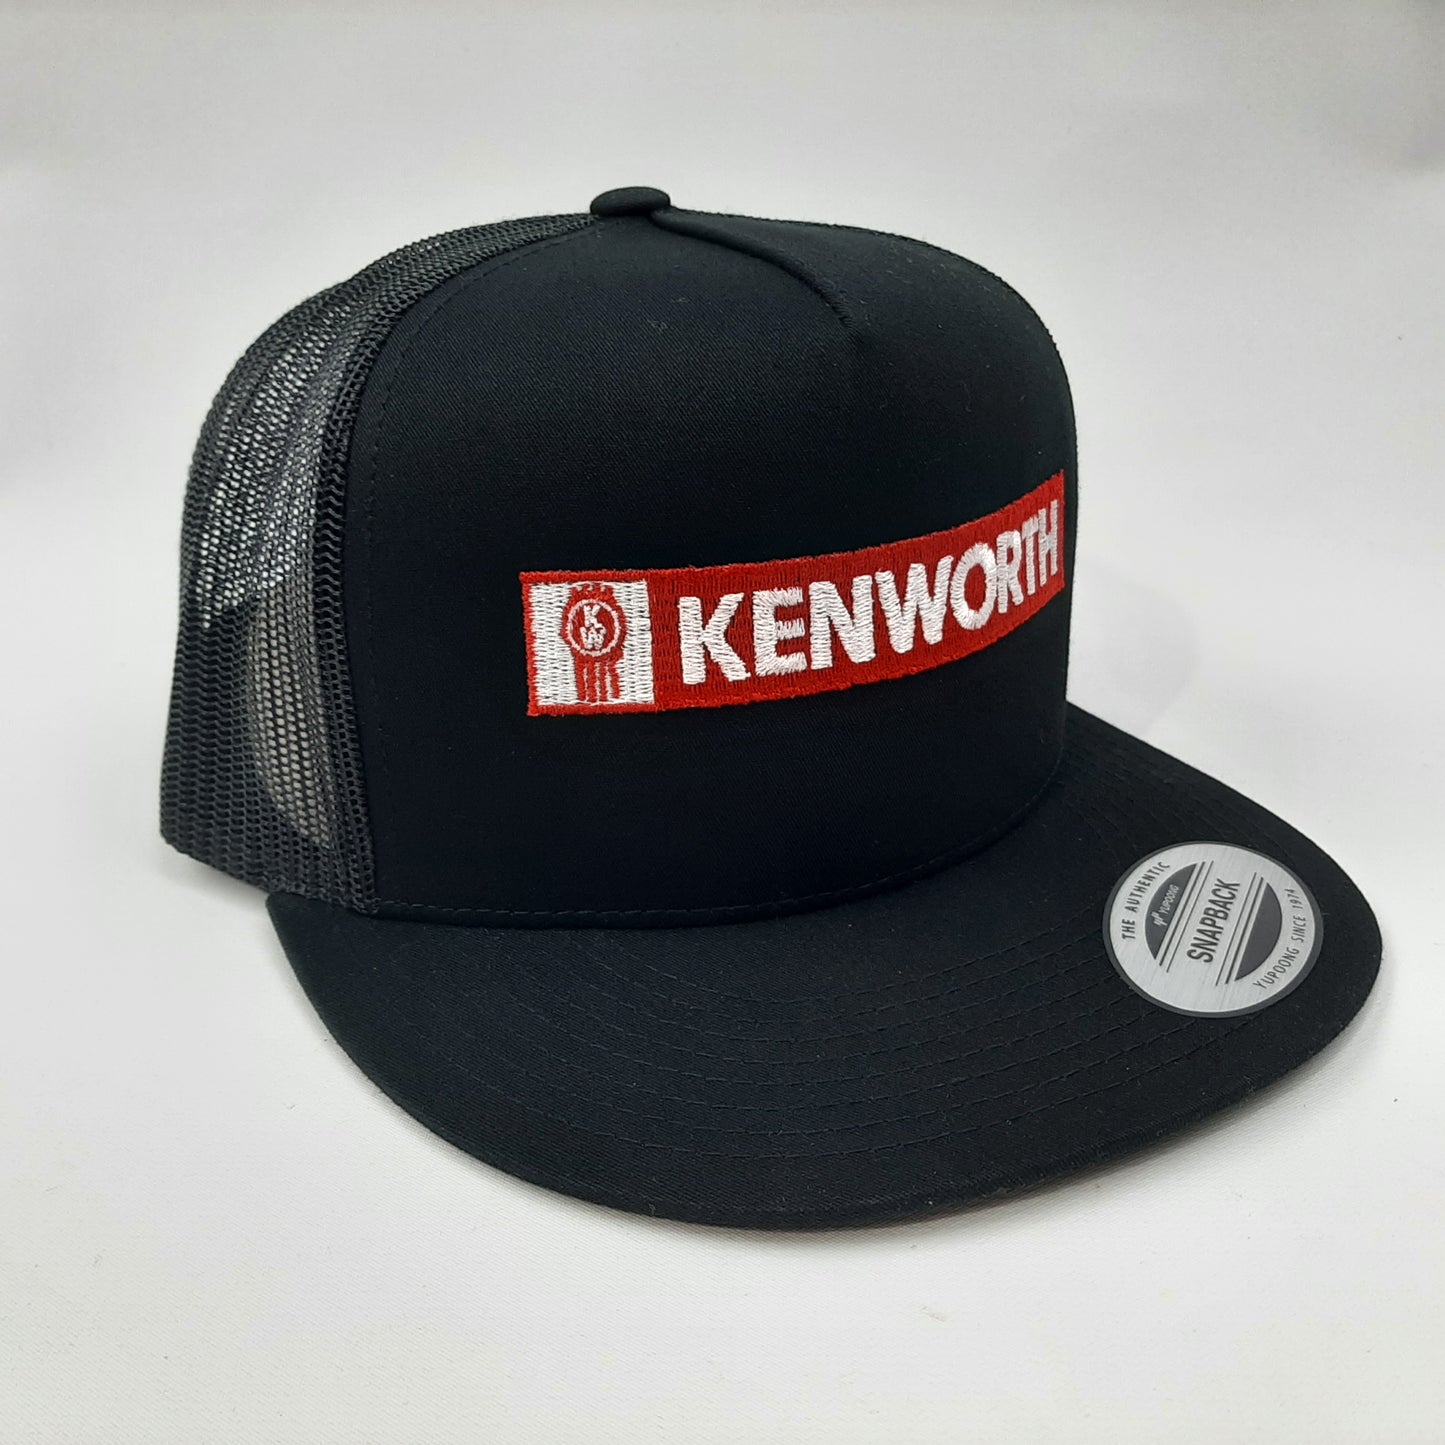 Kenworth Embroidered Richardson 112 Trucker Mesh Snapback Cap Hat